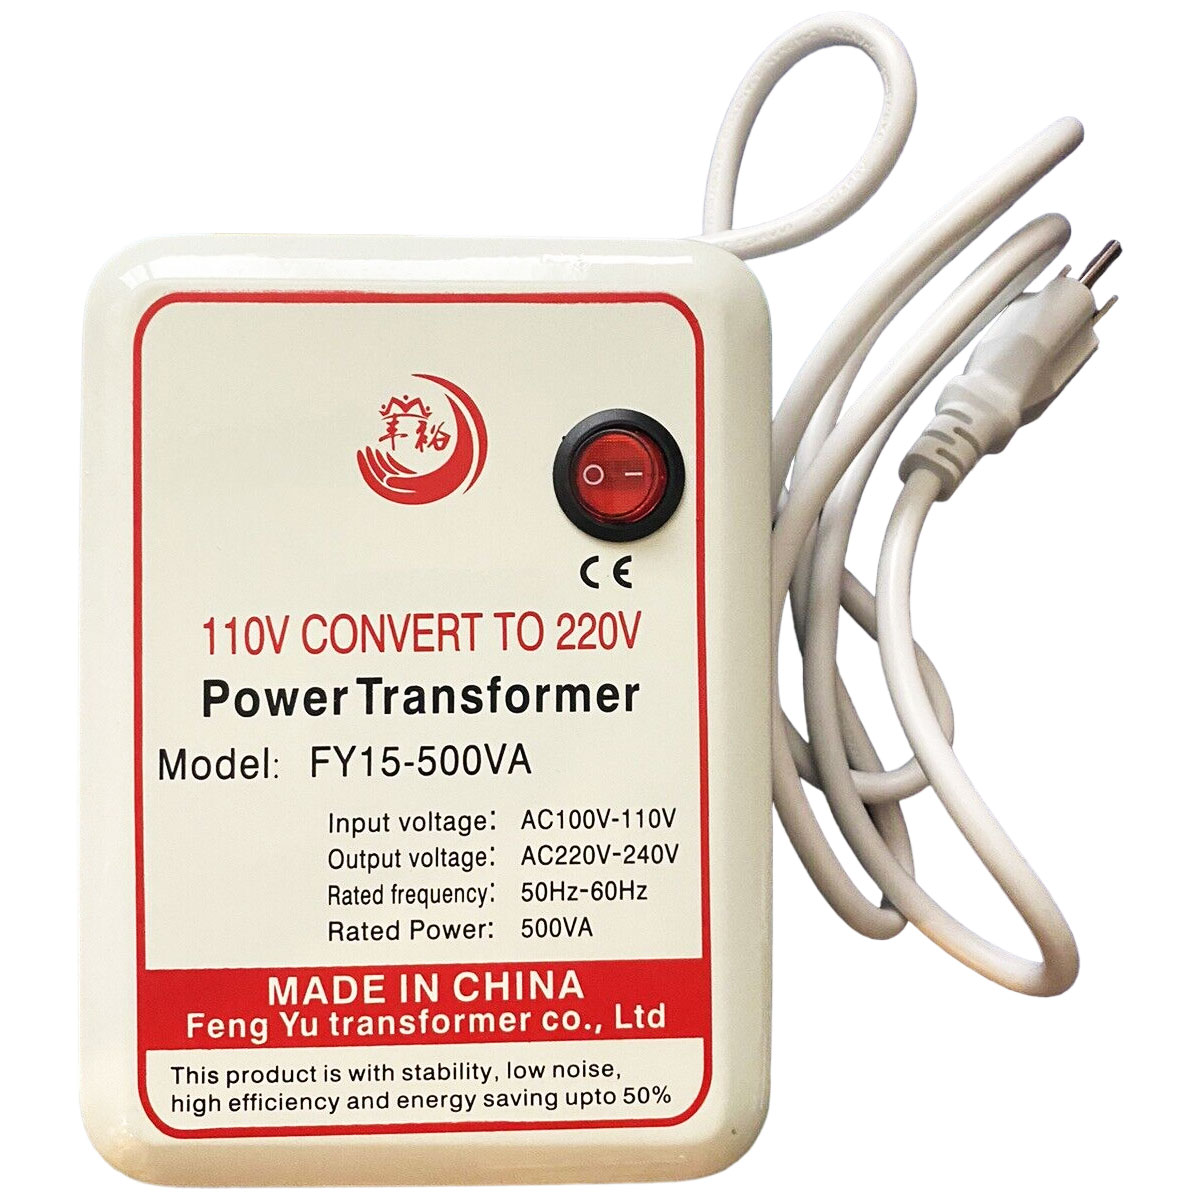 (500W) Voltage Converter from 110V to 220V, high Performance Step-up Transformer